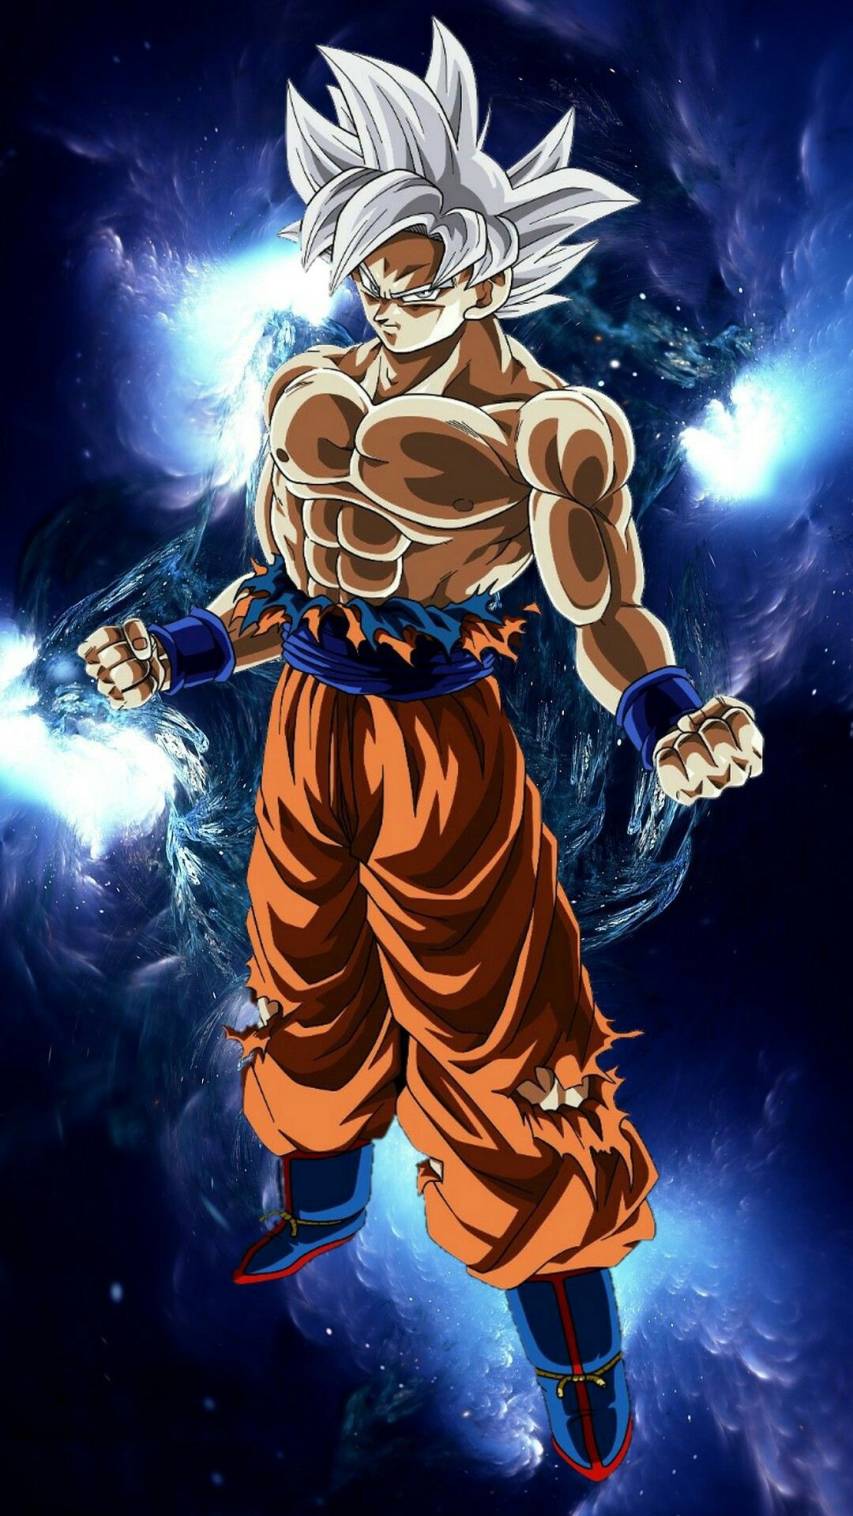 Goku Ultra instinct Background images for iPhone